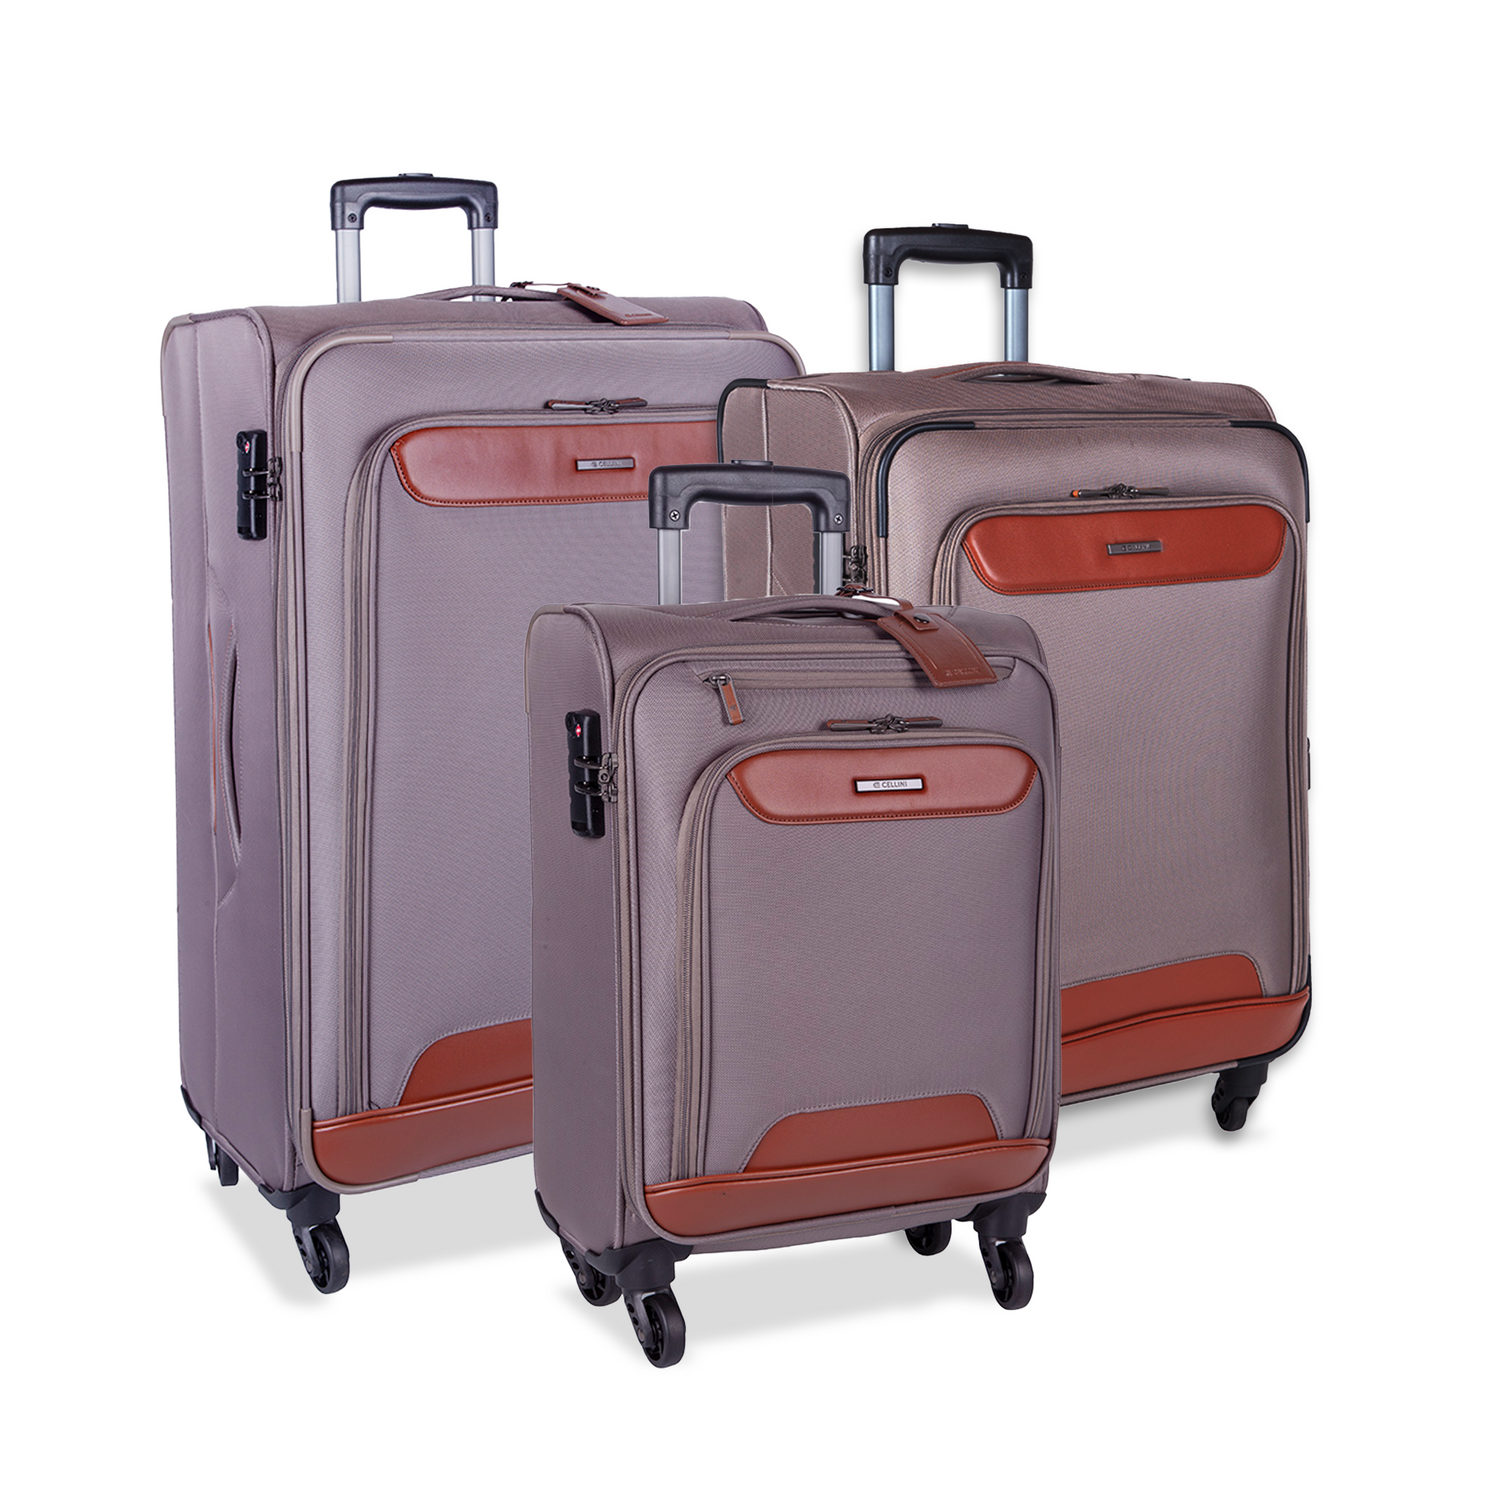 Monte Carlo 3 Piece Luggage Set